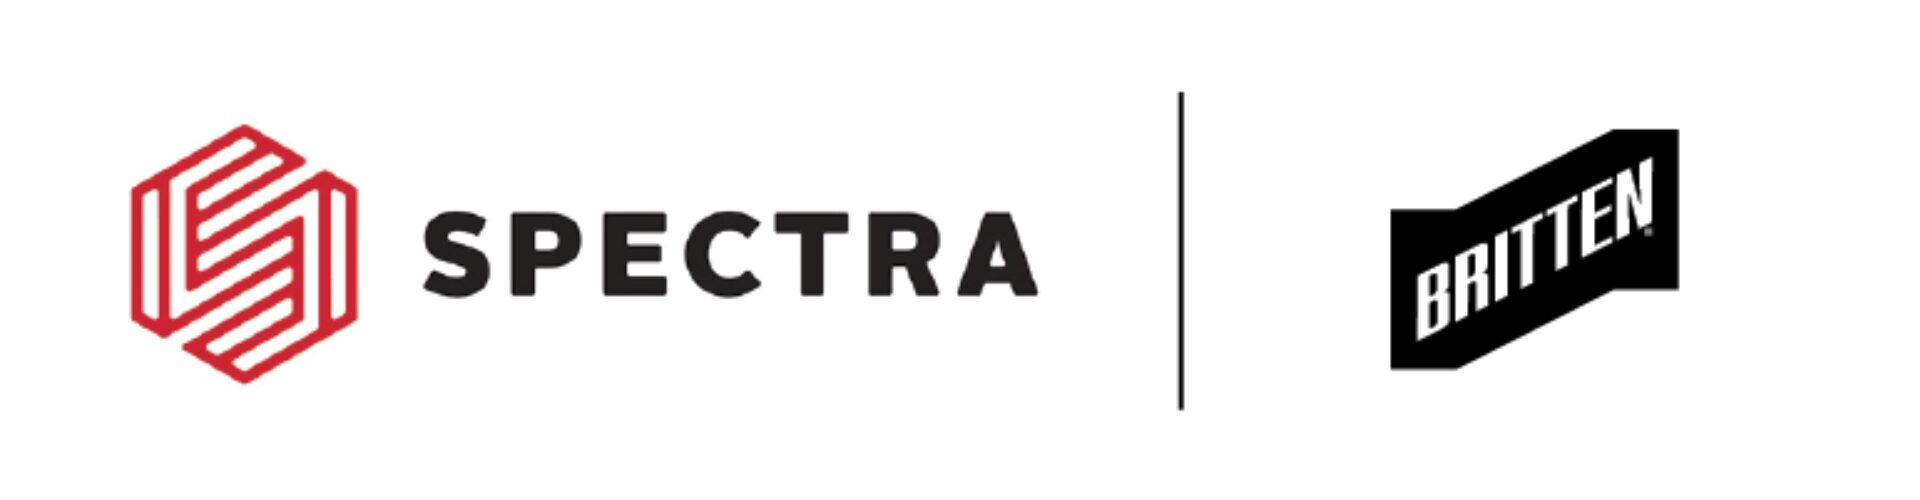 Spectra and Britten Partnership Logo